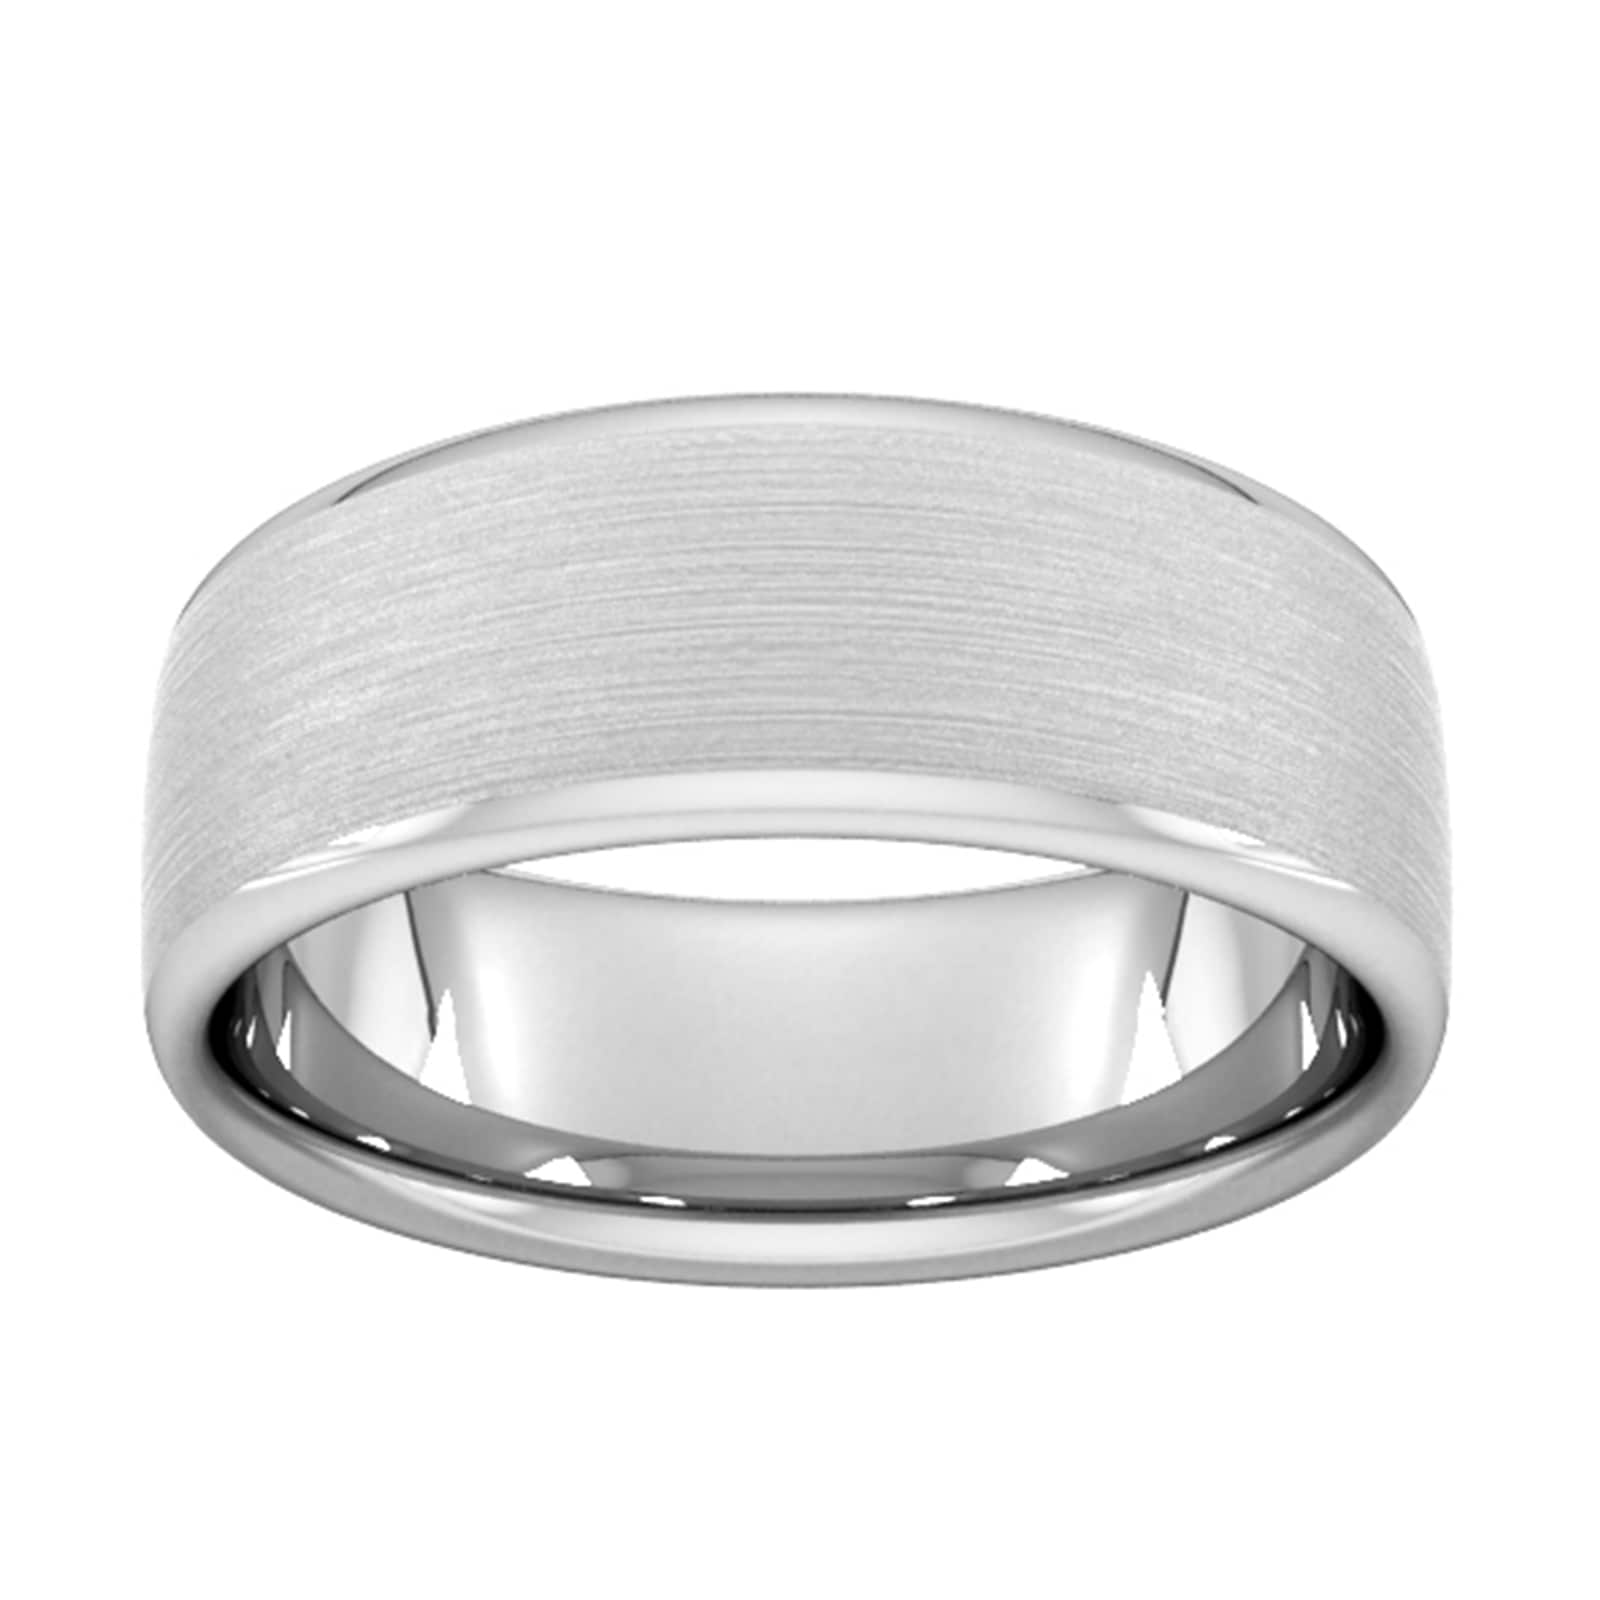 8mm D Shape Standard Matt Finished Wedding Ring In 950 Palladium - Ring Size L